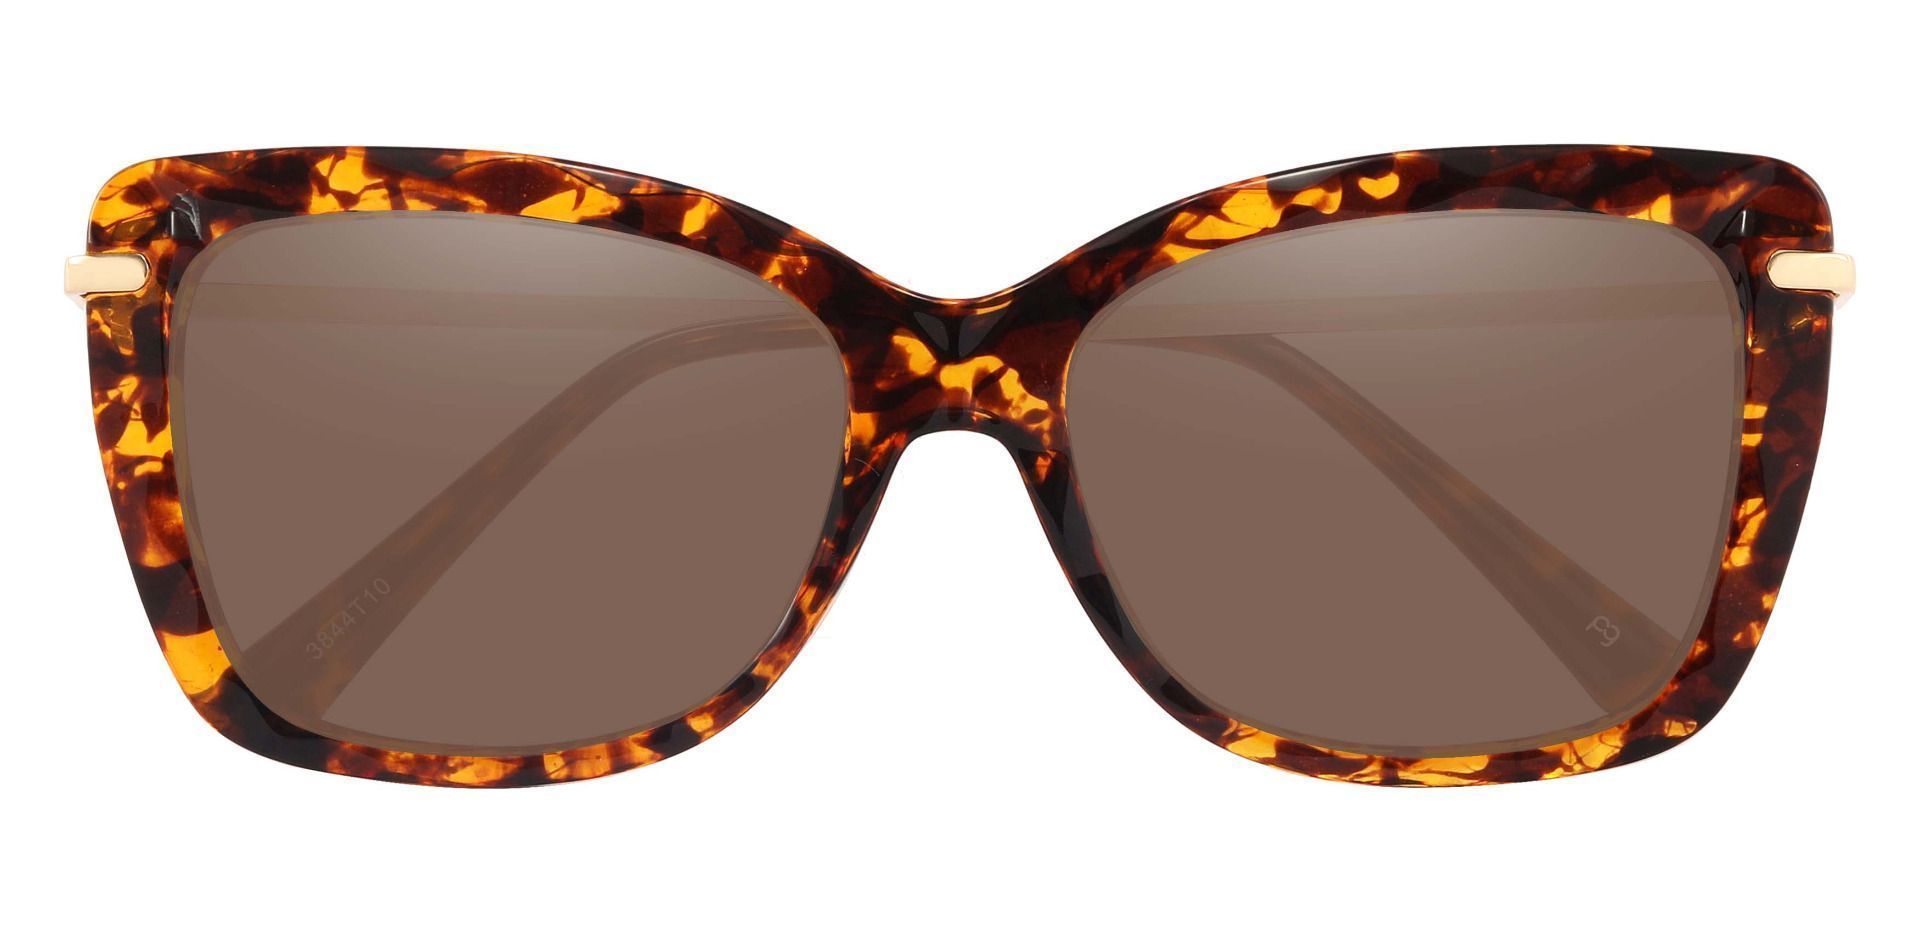 Shoshanna Rectangle Reading Sunglasses - Tortoise Frame With Brown Lenses